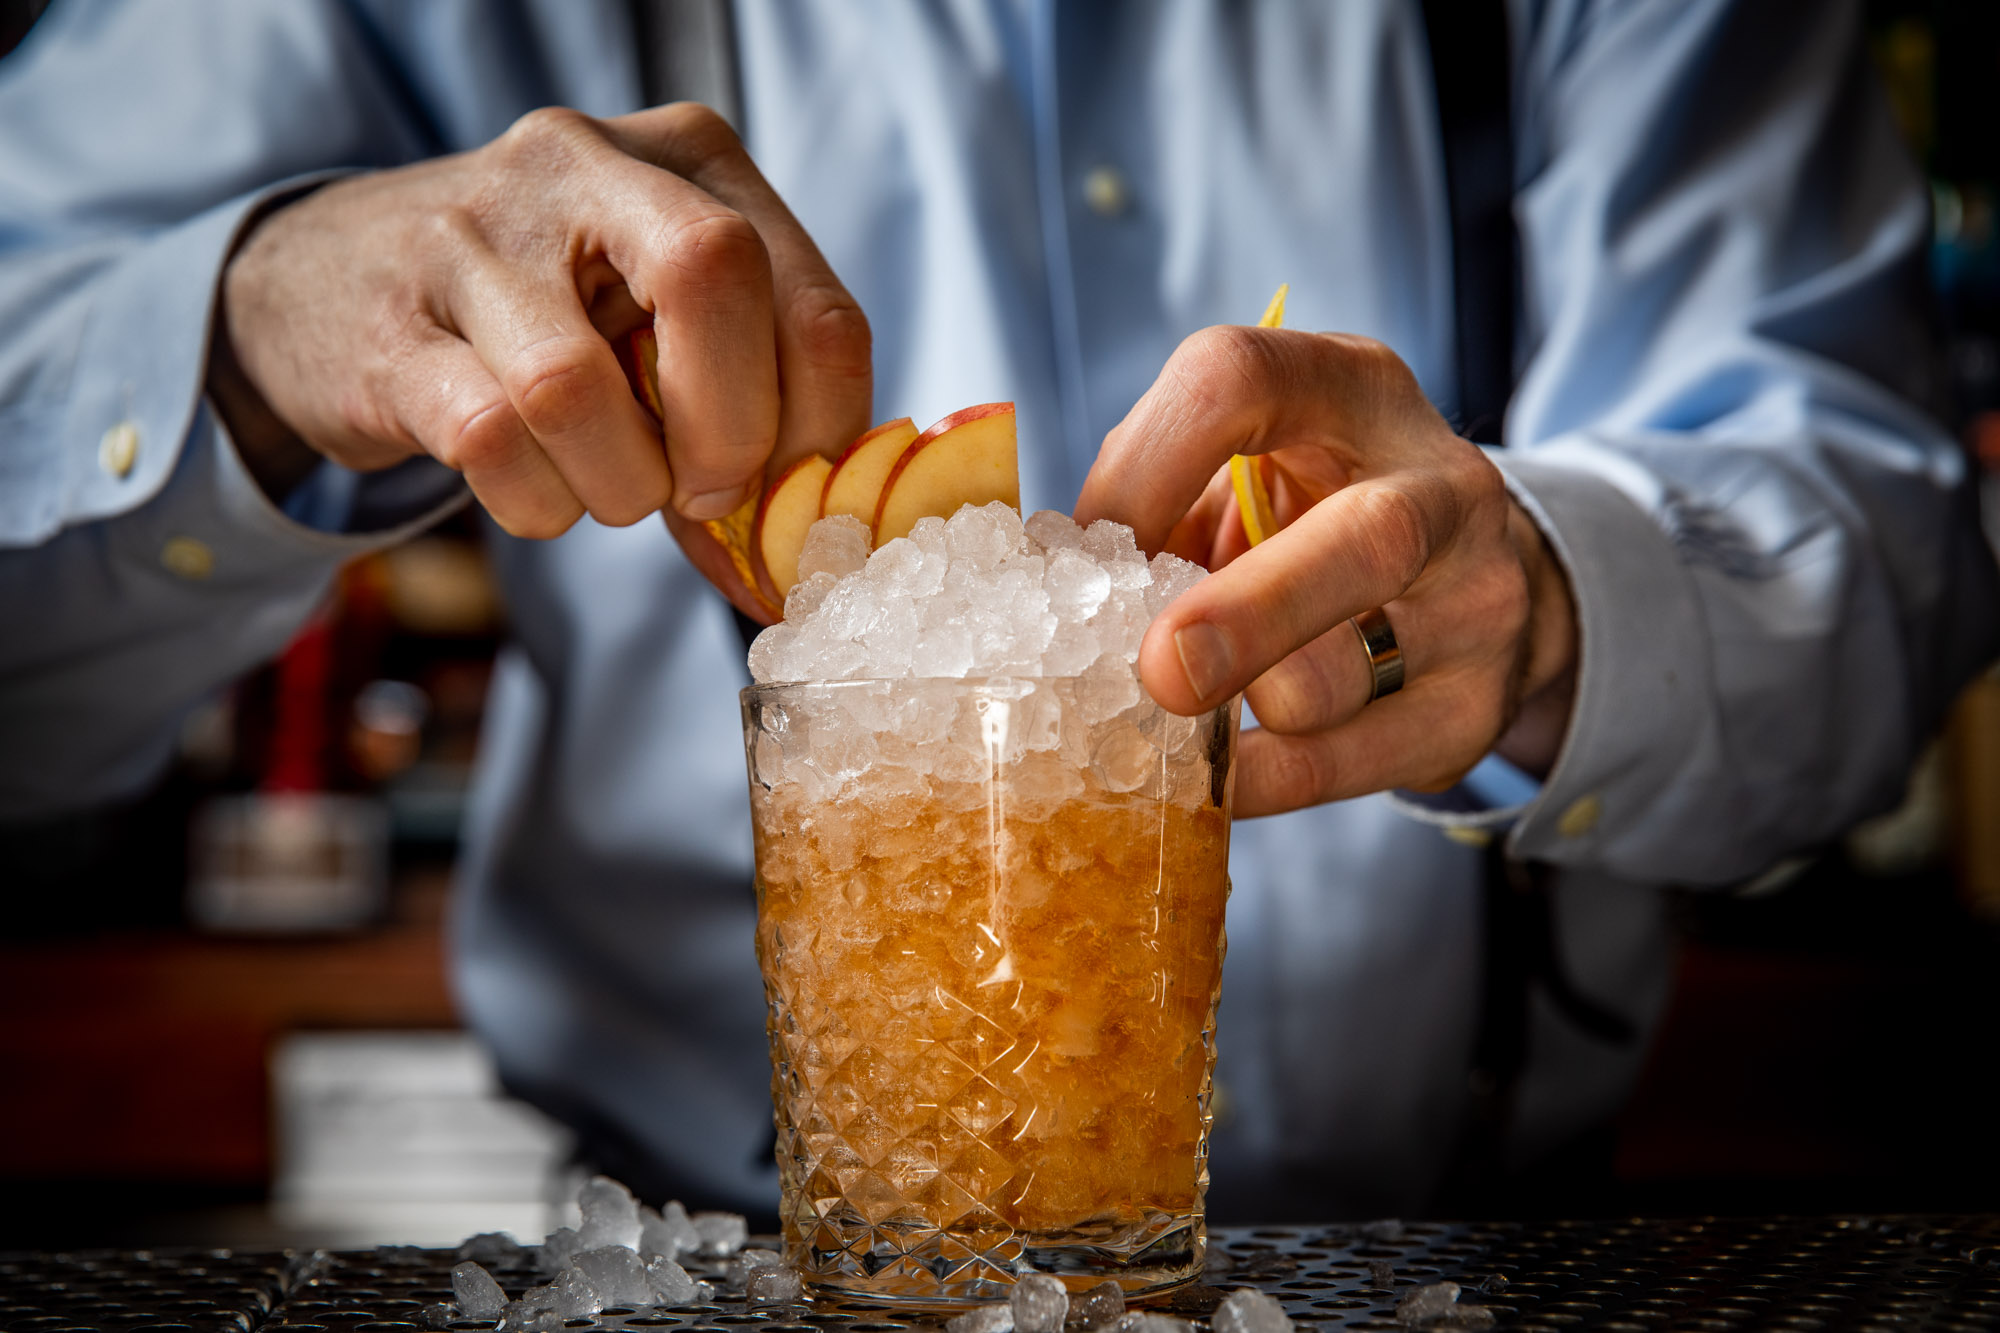 bartender putting a peach garnish on a drink